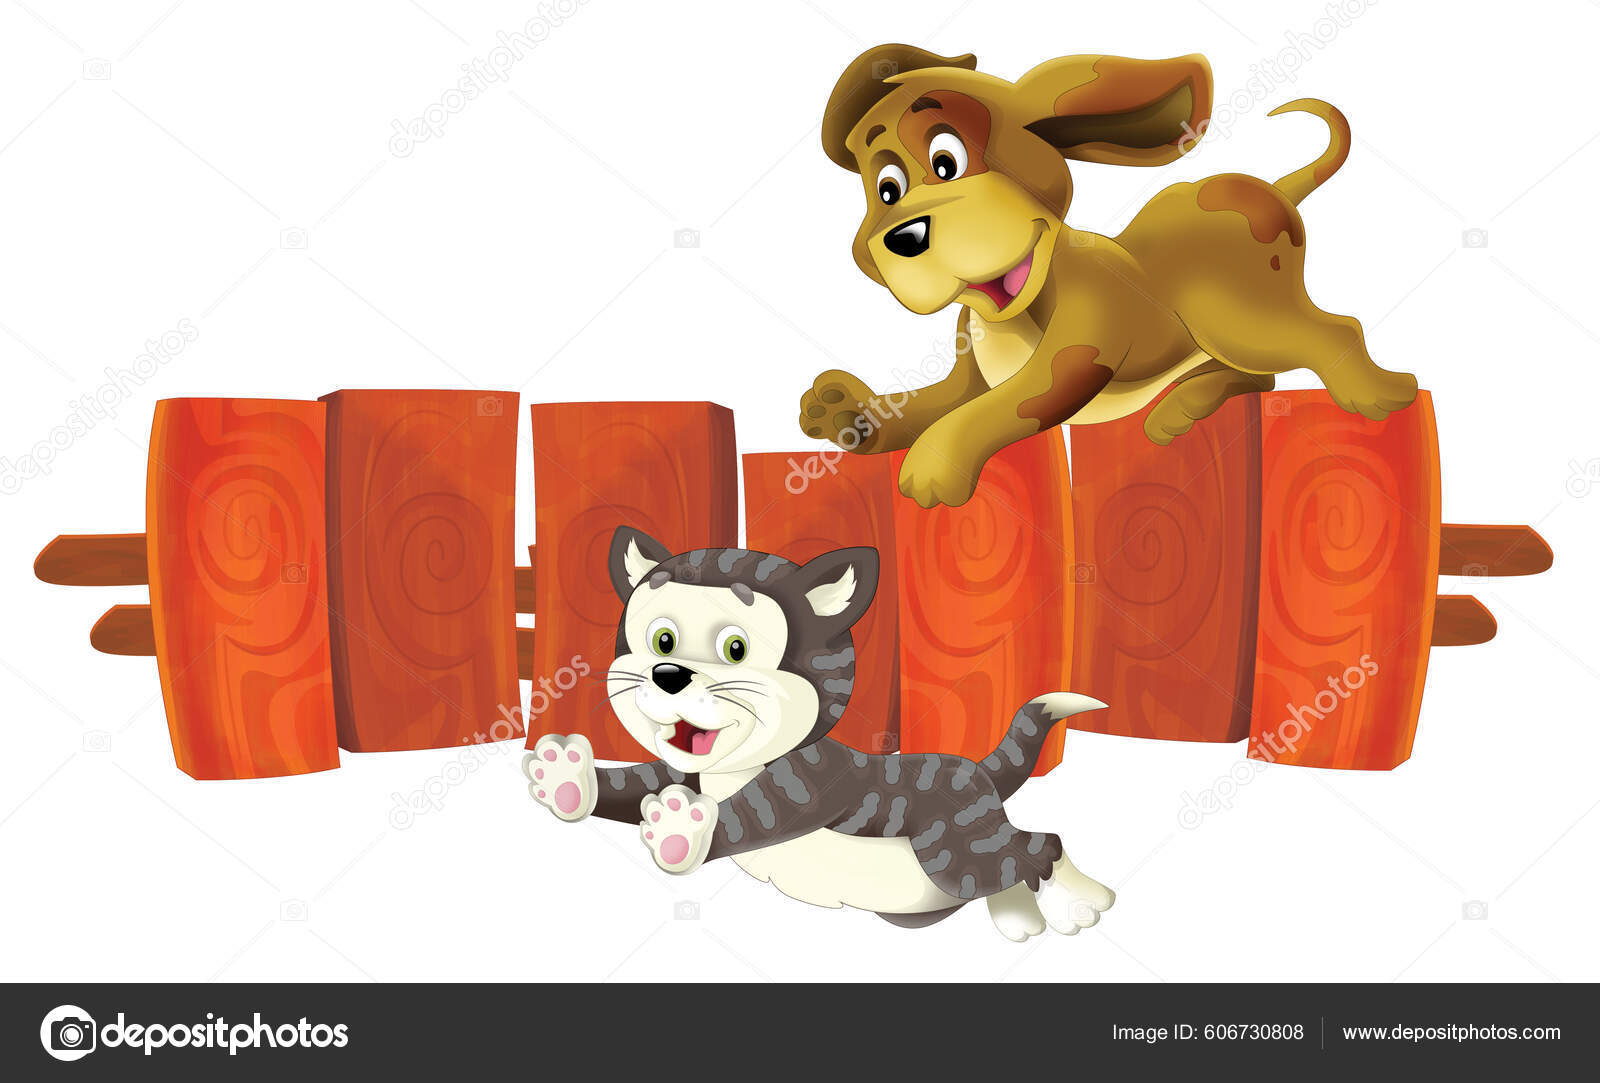 Dog chasing cat Stock Photos, Royalty Free Dog chasing cat Images |  Depositphotos